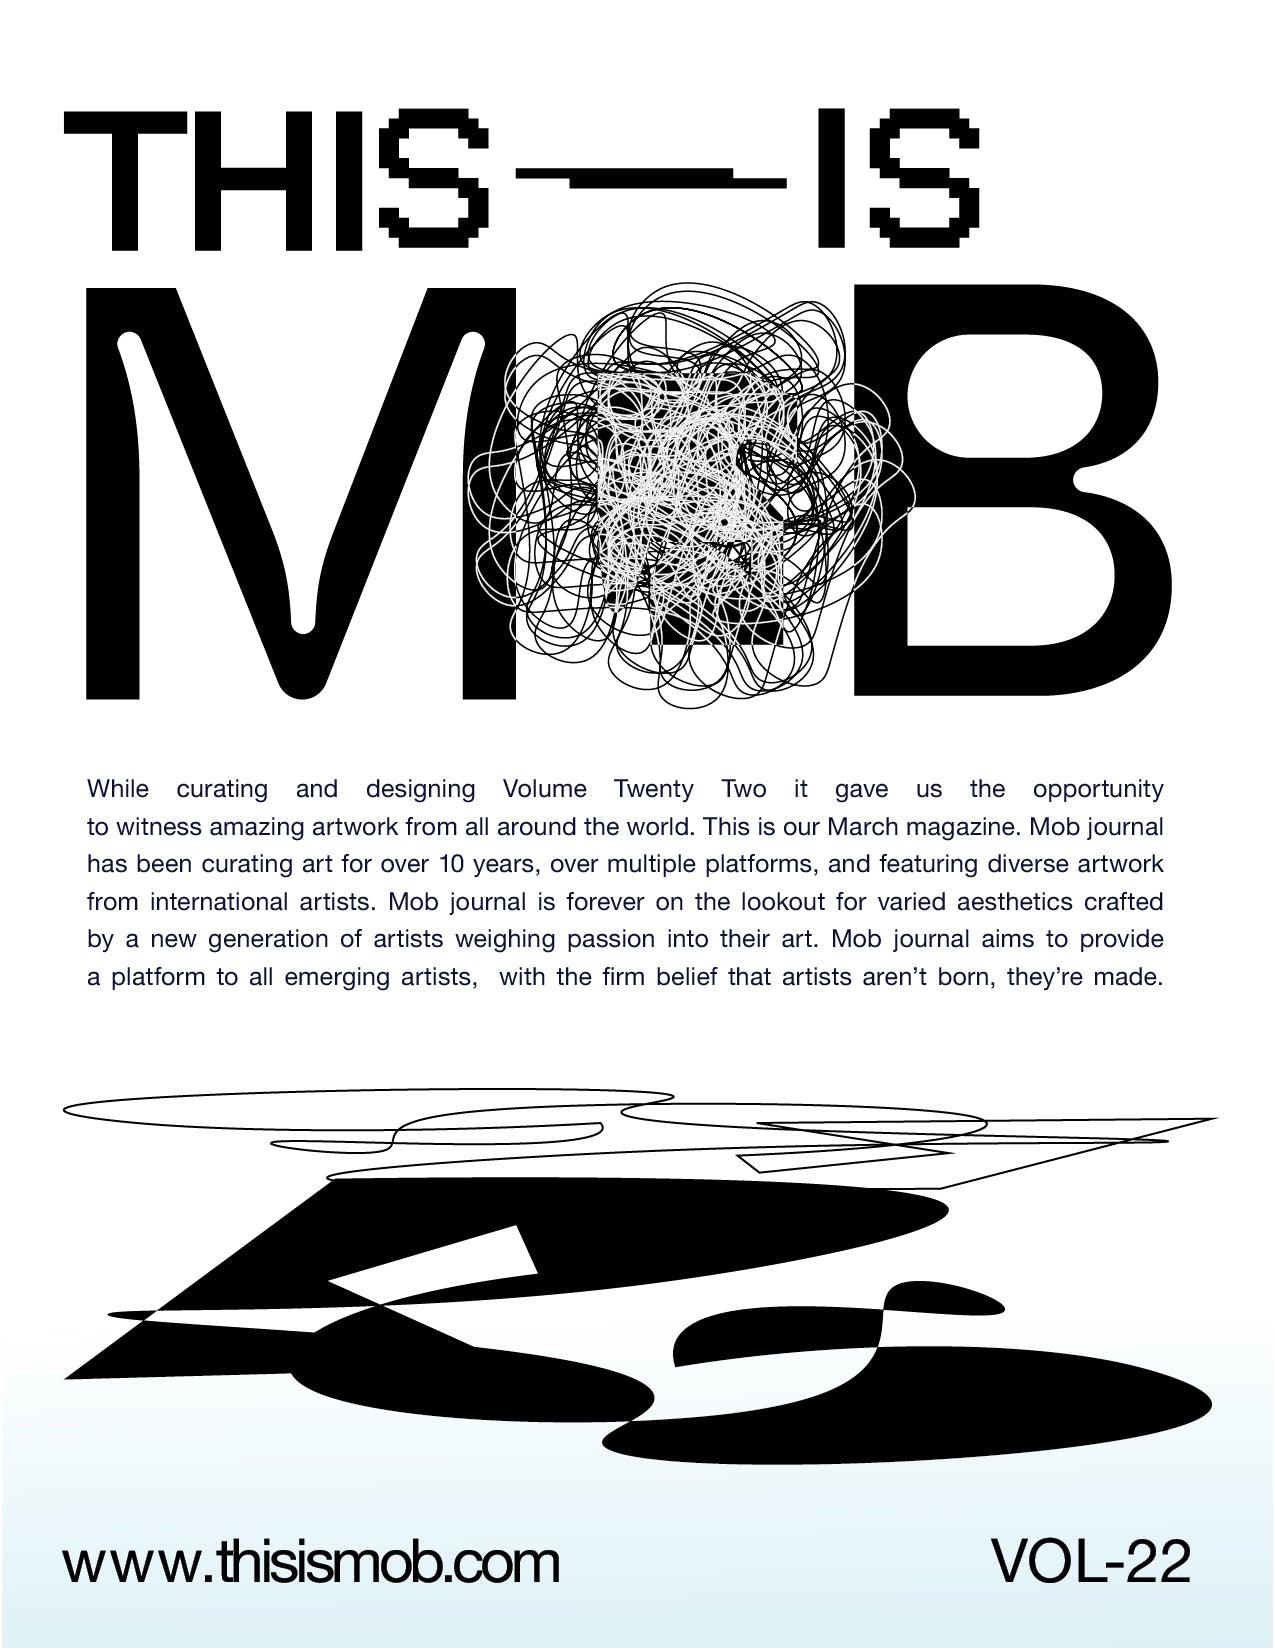 MOB JOURNAL | VOLUME TWENTY TWO | ISSUE #59 - Mob Journal